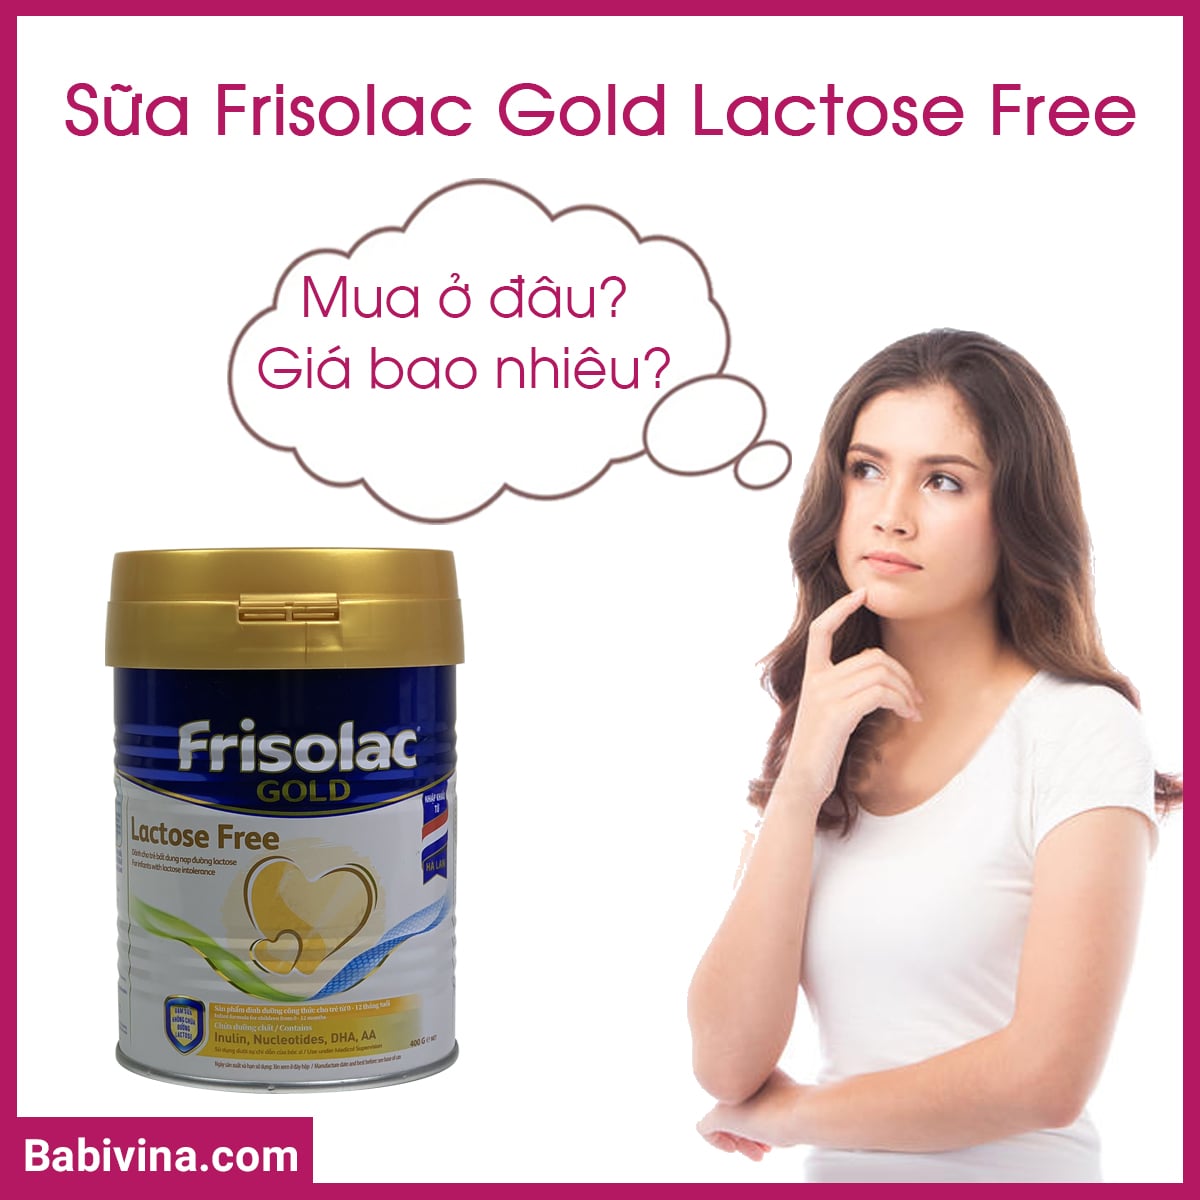 mua-sua-frisolac-gold-lactose-free-400g-o-dau-gia-bao-nhieu